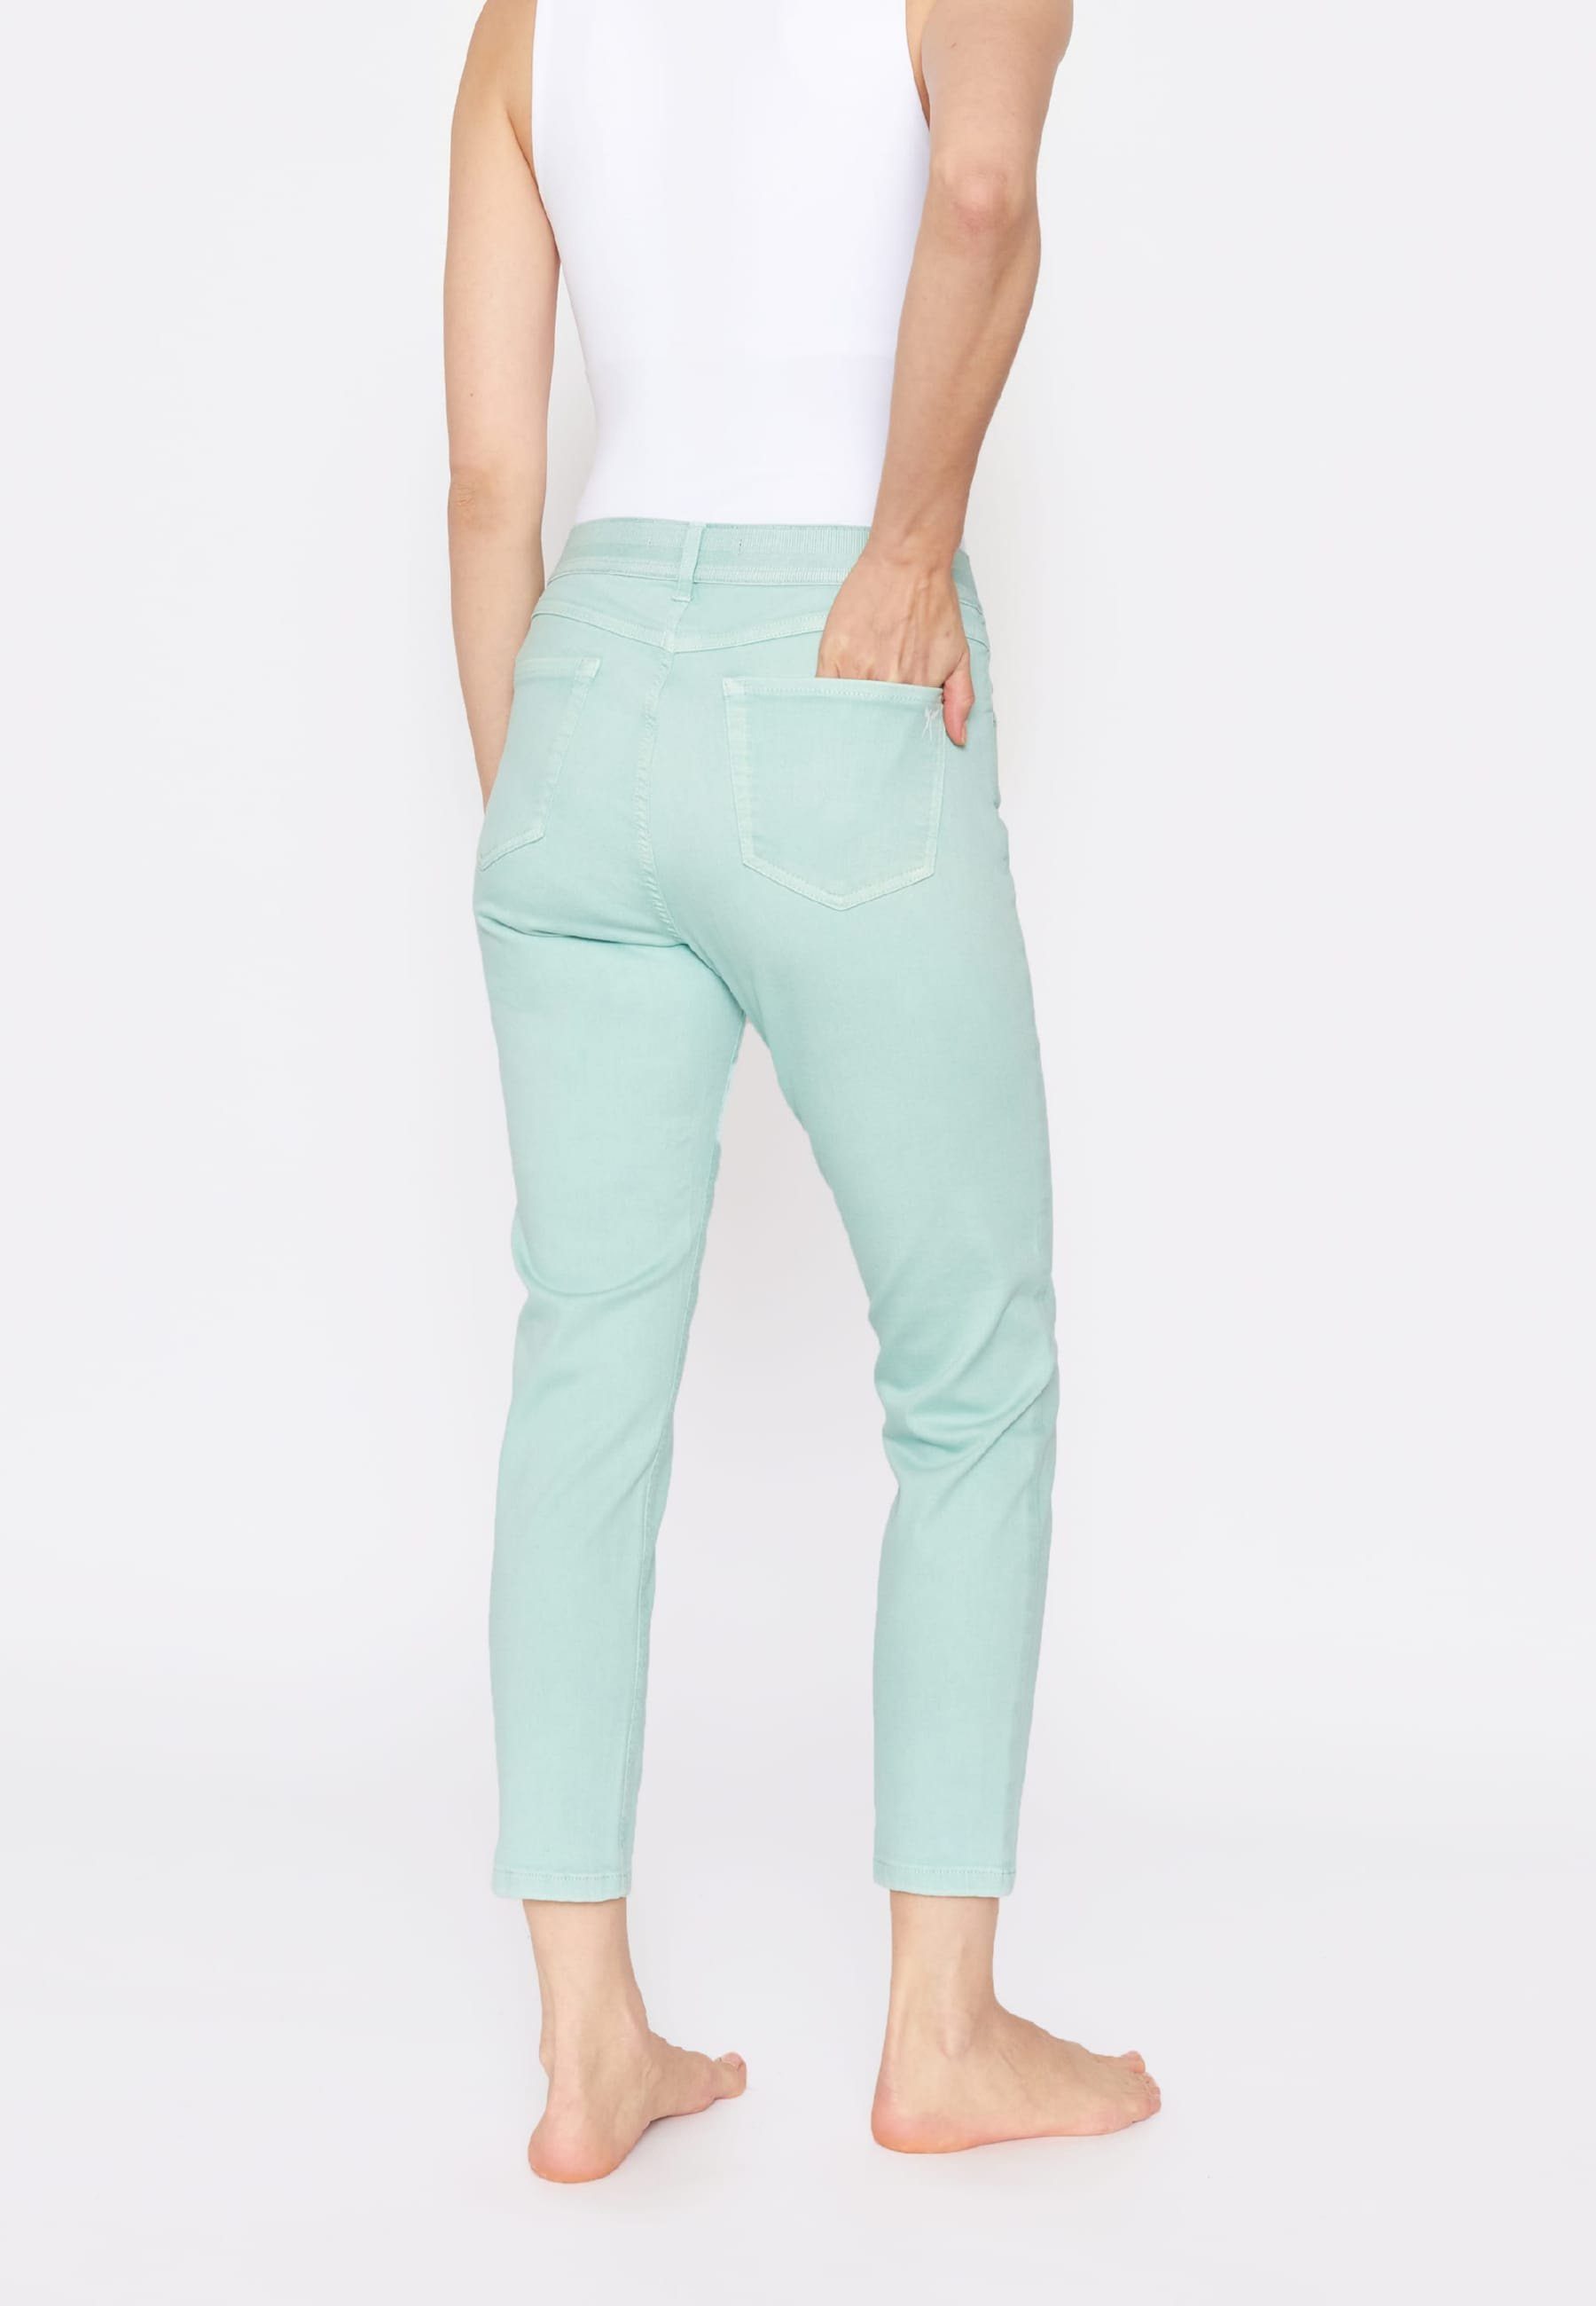 ANGELS Jeans mit Label-Applikationen Coloured Crop Denim Slim-fit-Jeans OSFA mint mit